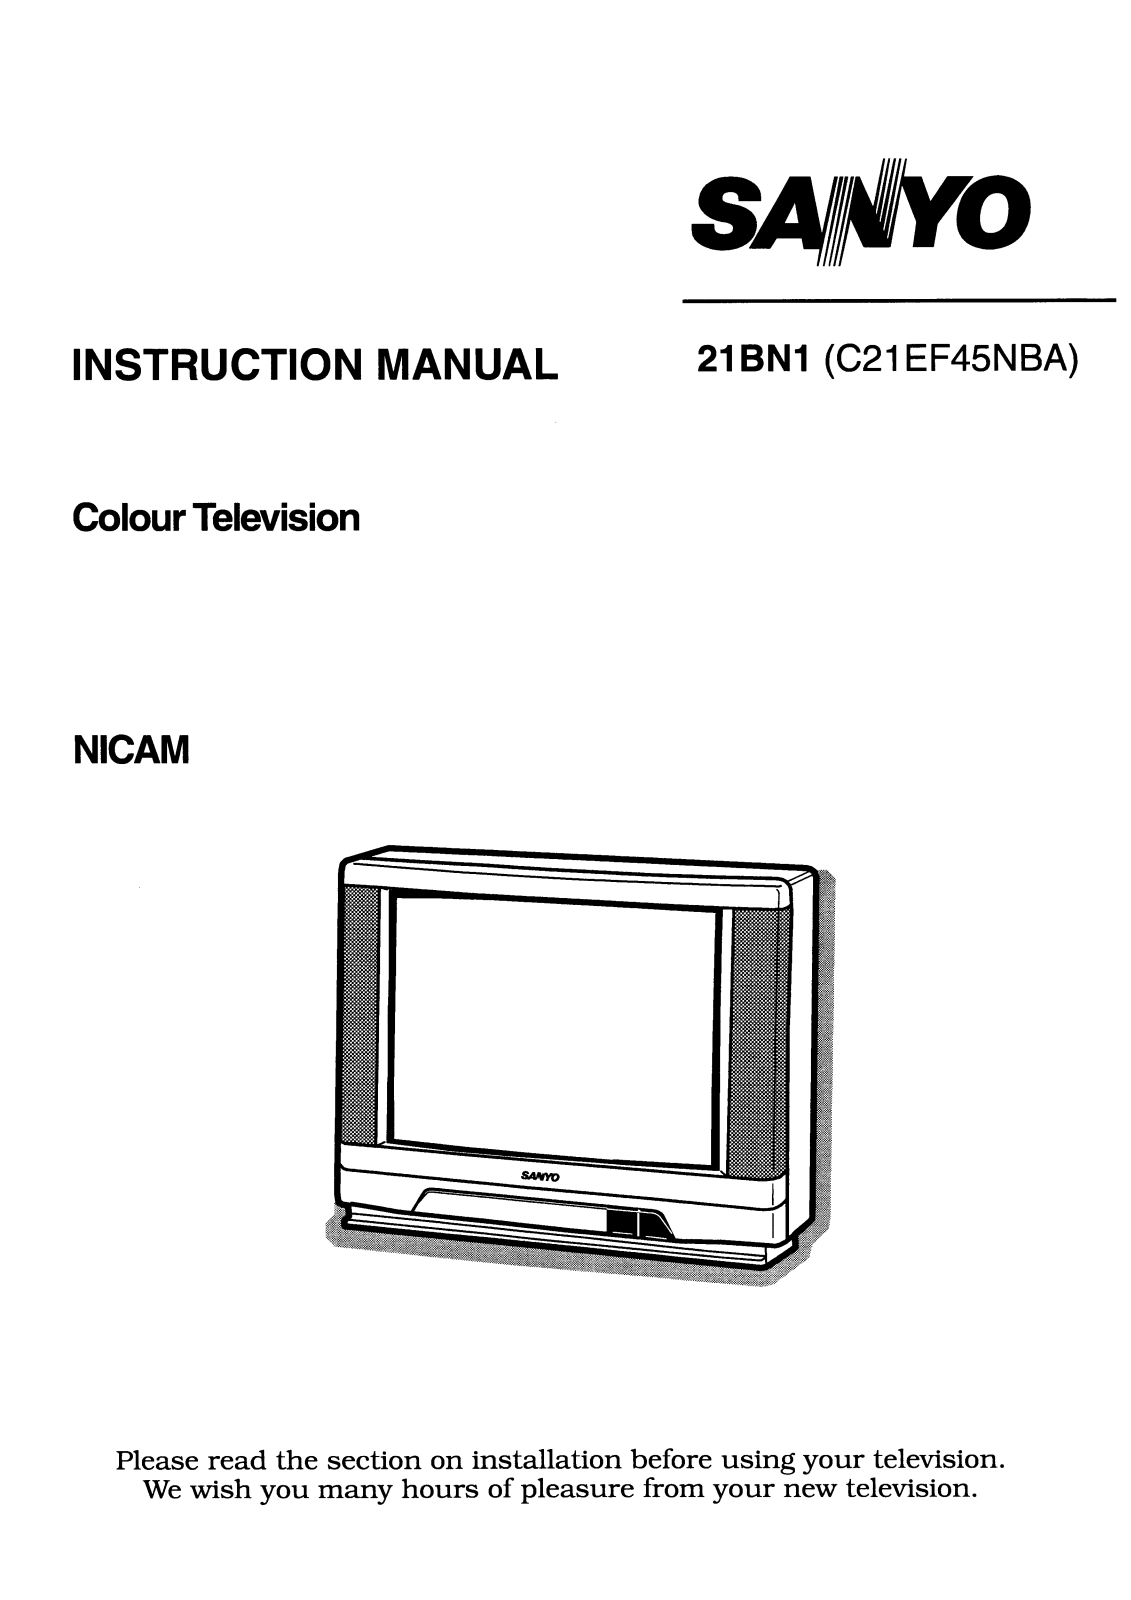 Sanyo 21BN1 Instruction Manual